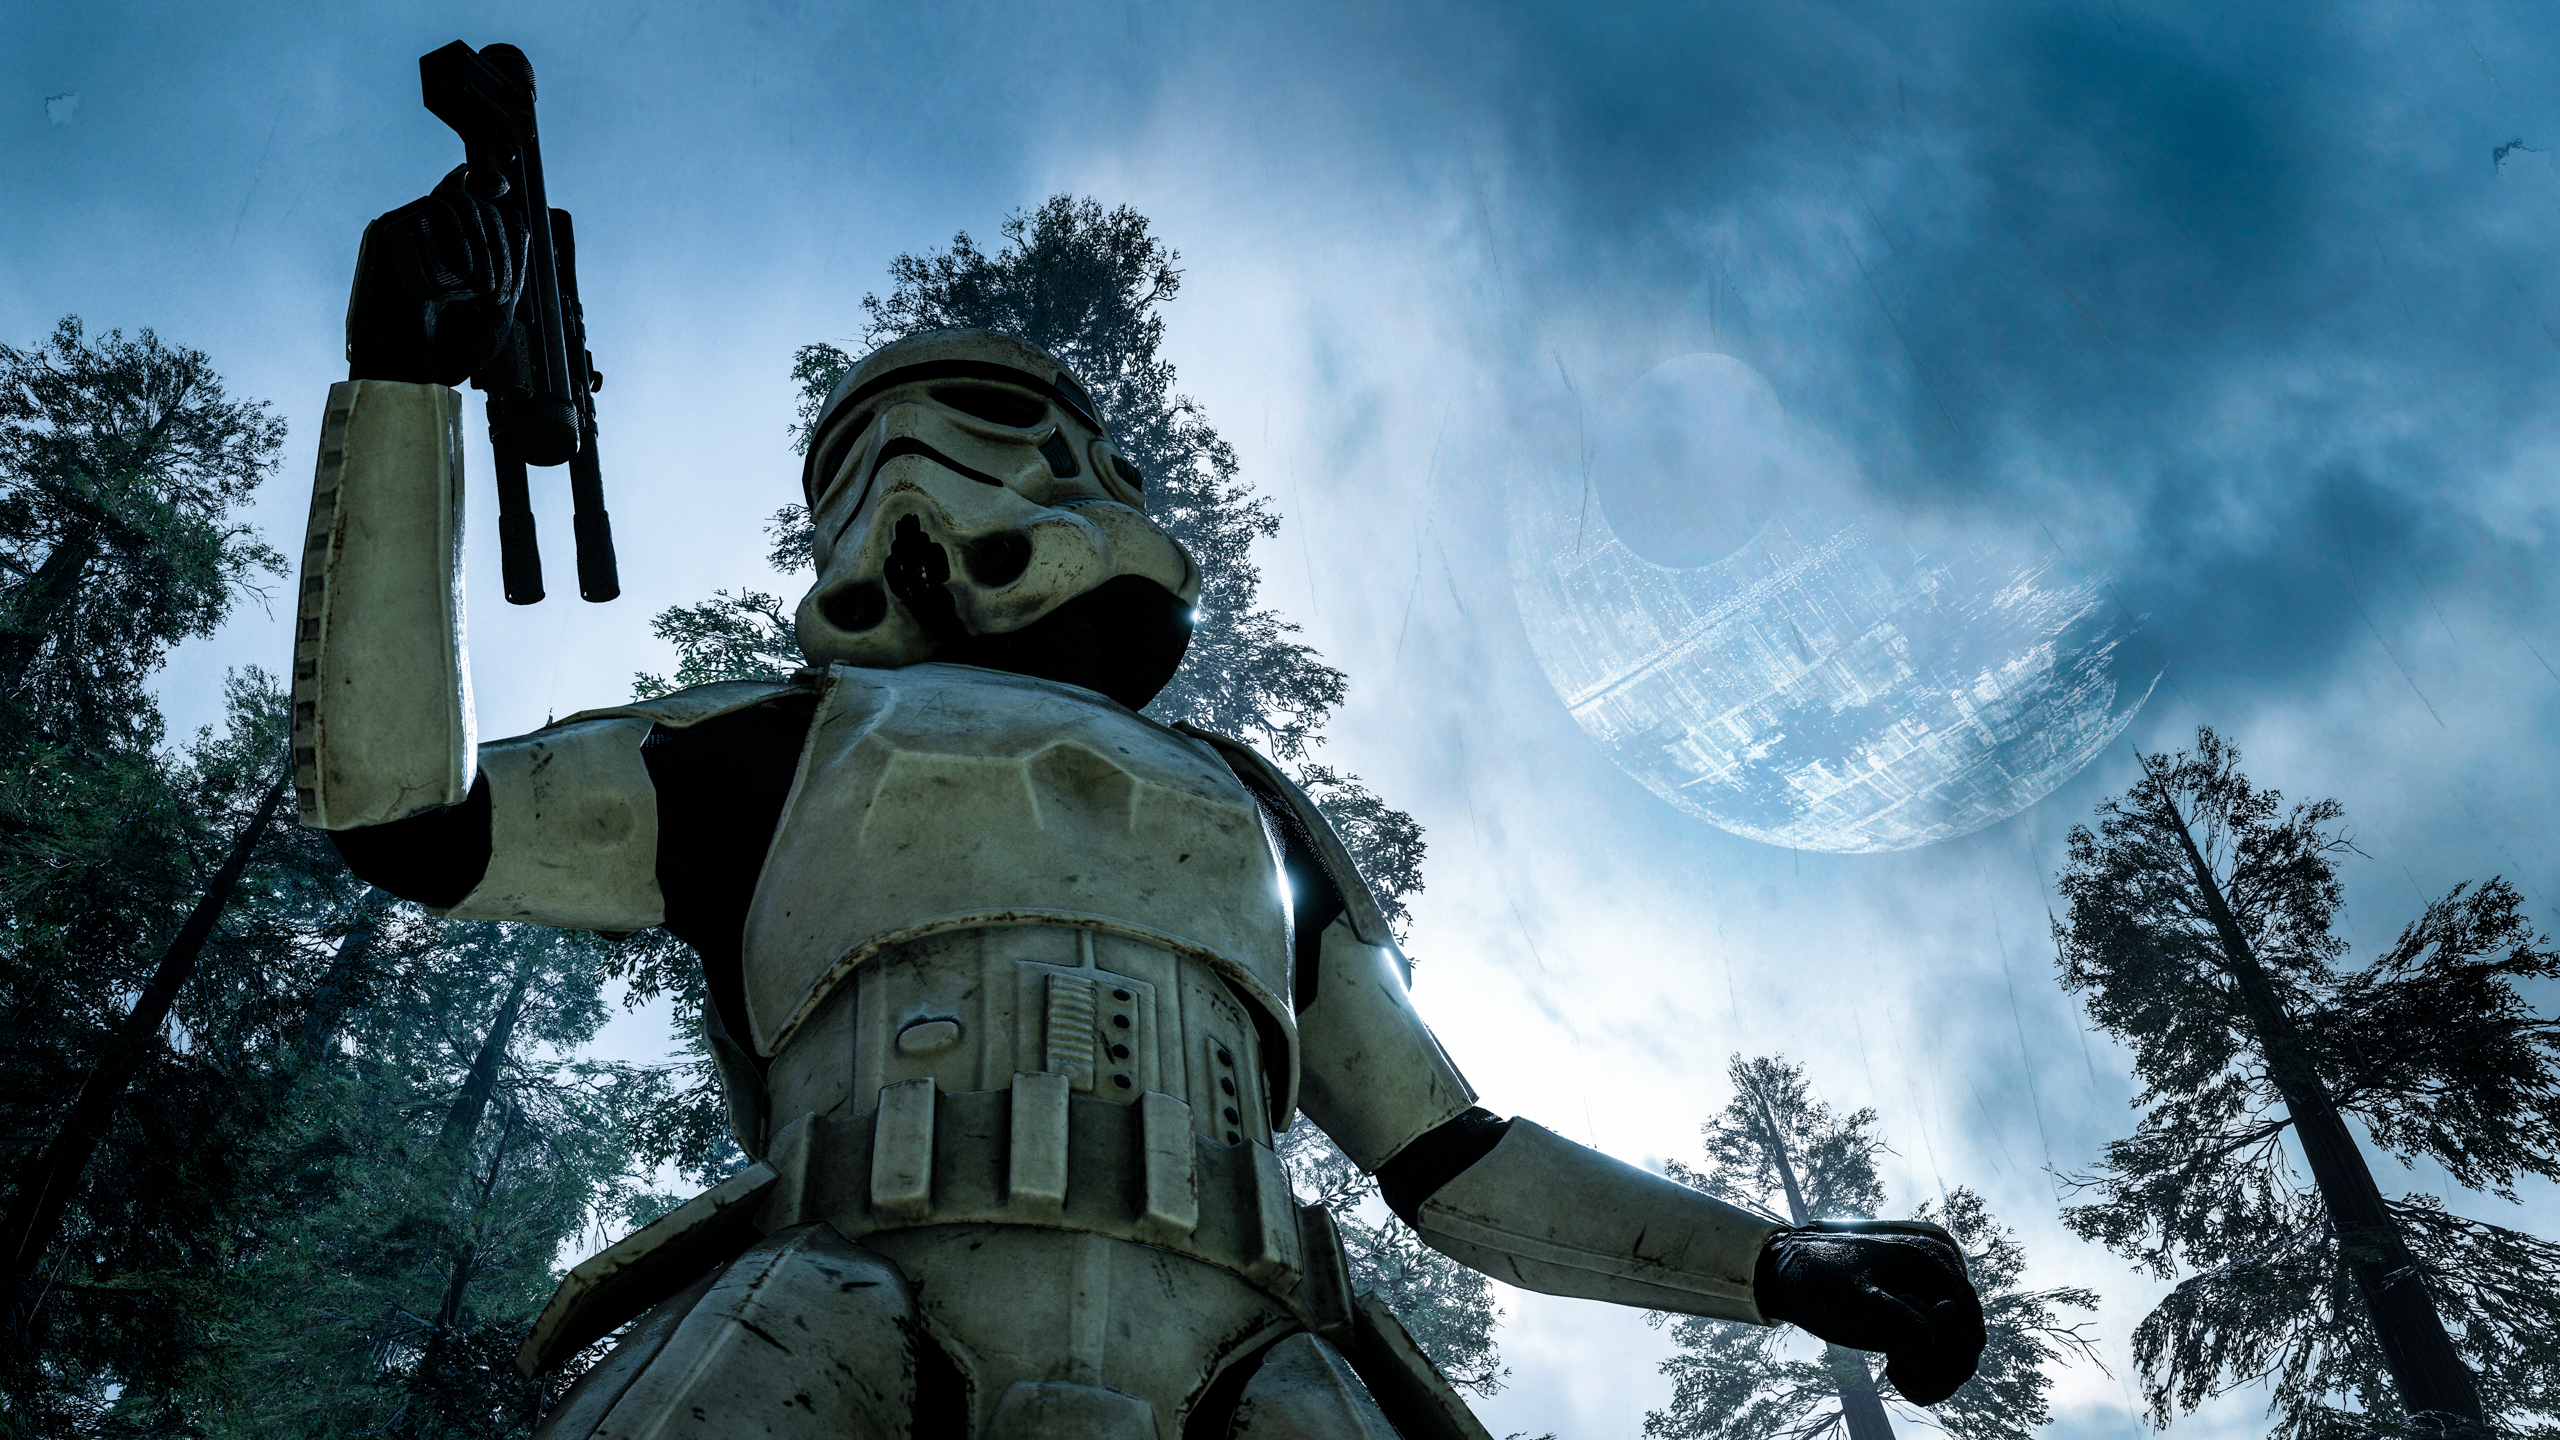 Video Game Star Wars Battlefront (2015) HD Wallpaper | Background Image